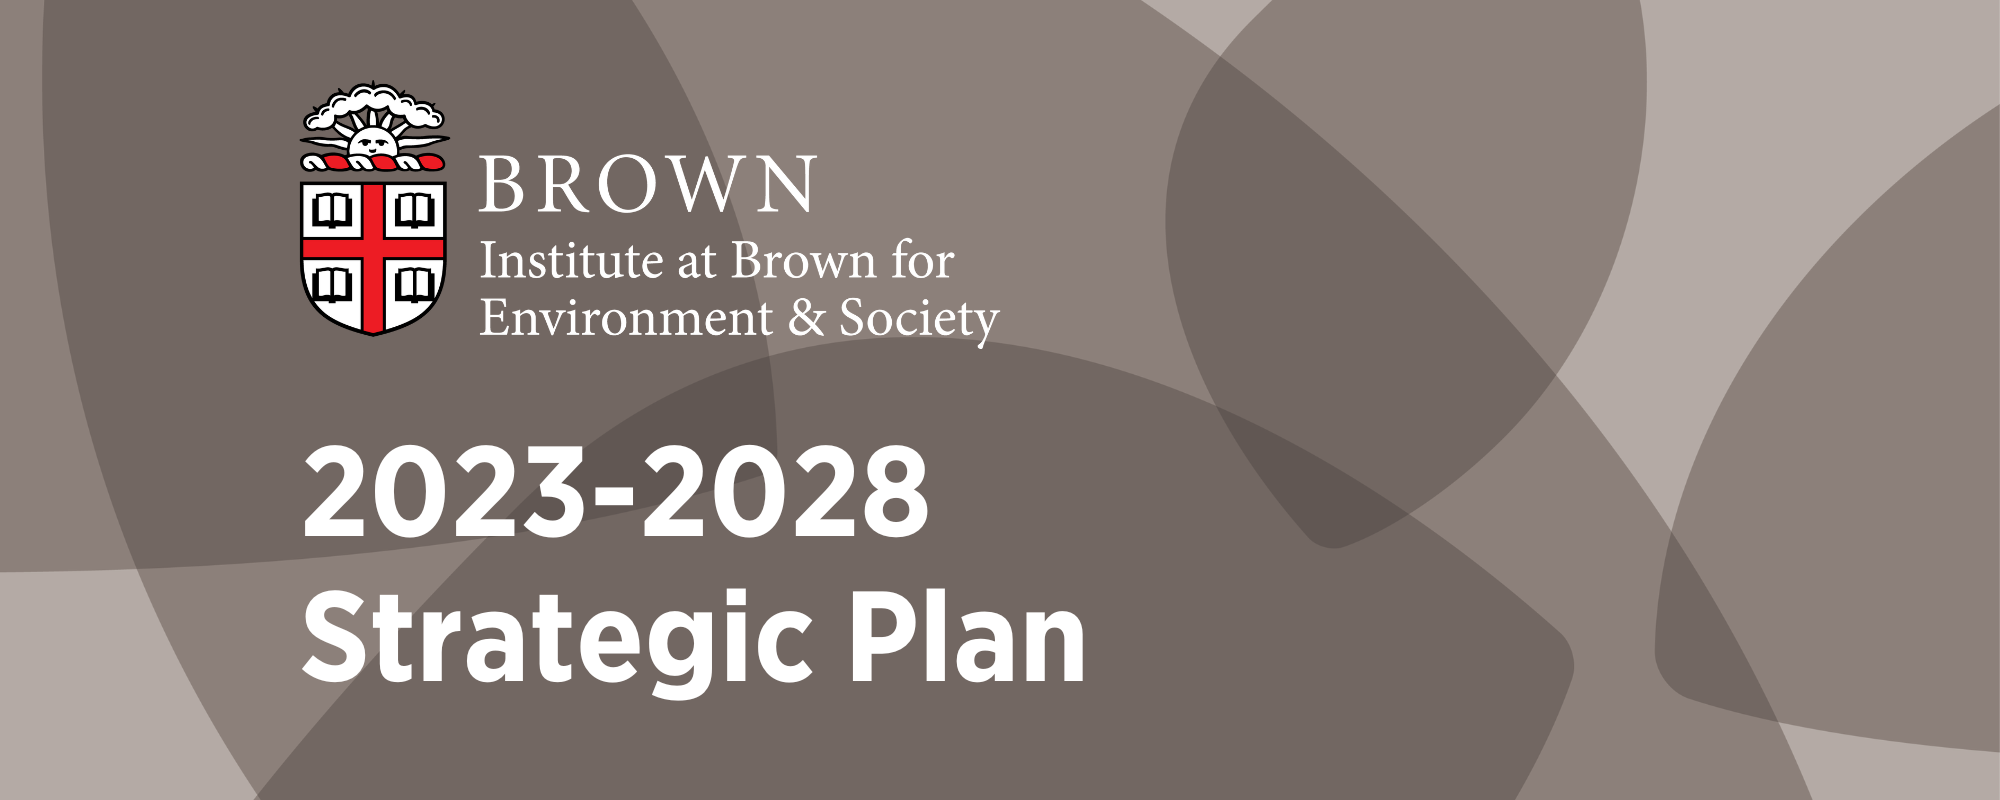 IBES 2023-2028 Strategic Plan